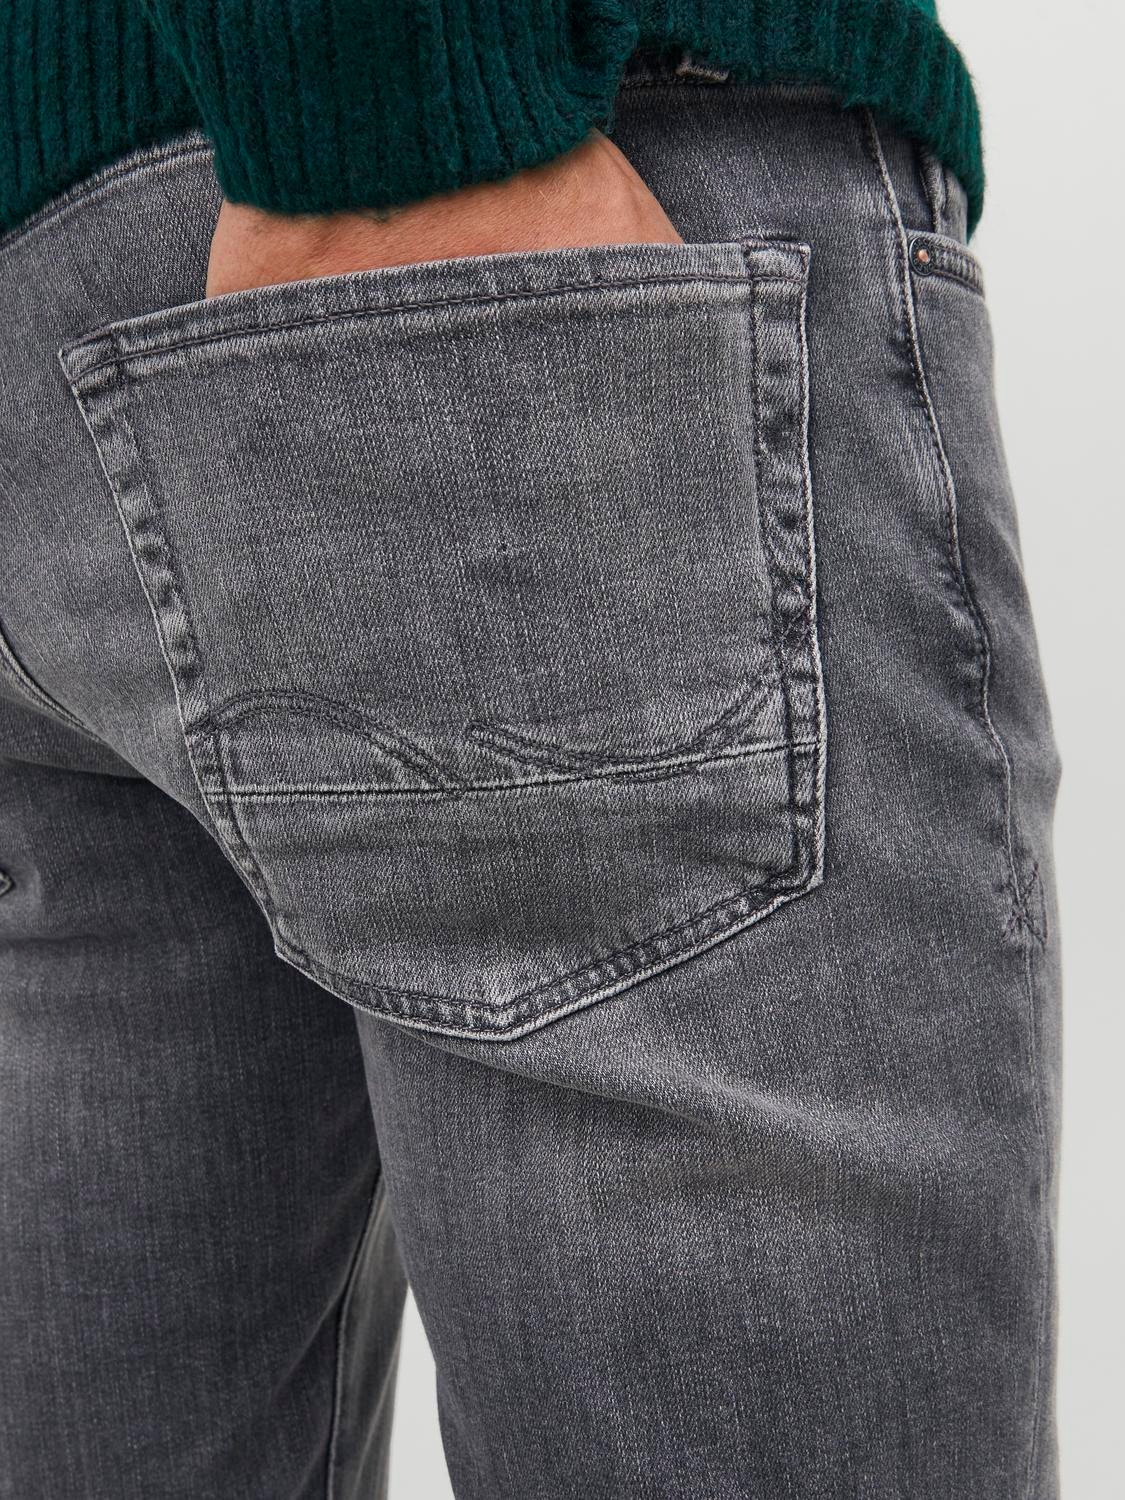 Jack & Jones JJITIM JJVINTAGE CJ 515 Slim Fit jeans mit geradem Bein -Black Denim - 12231237